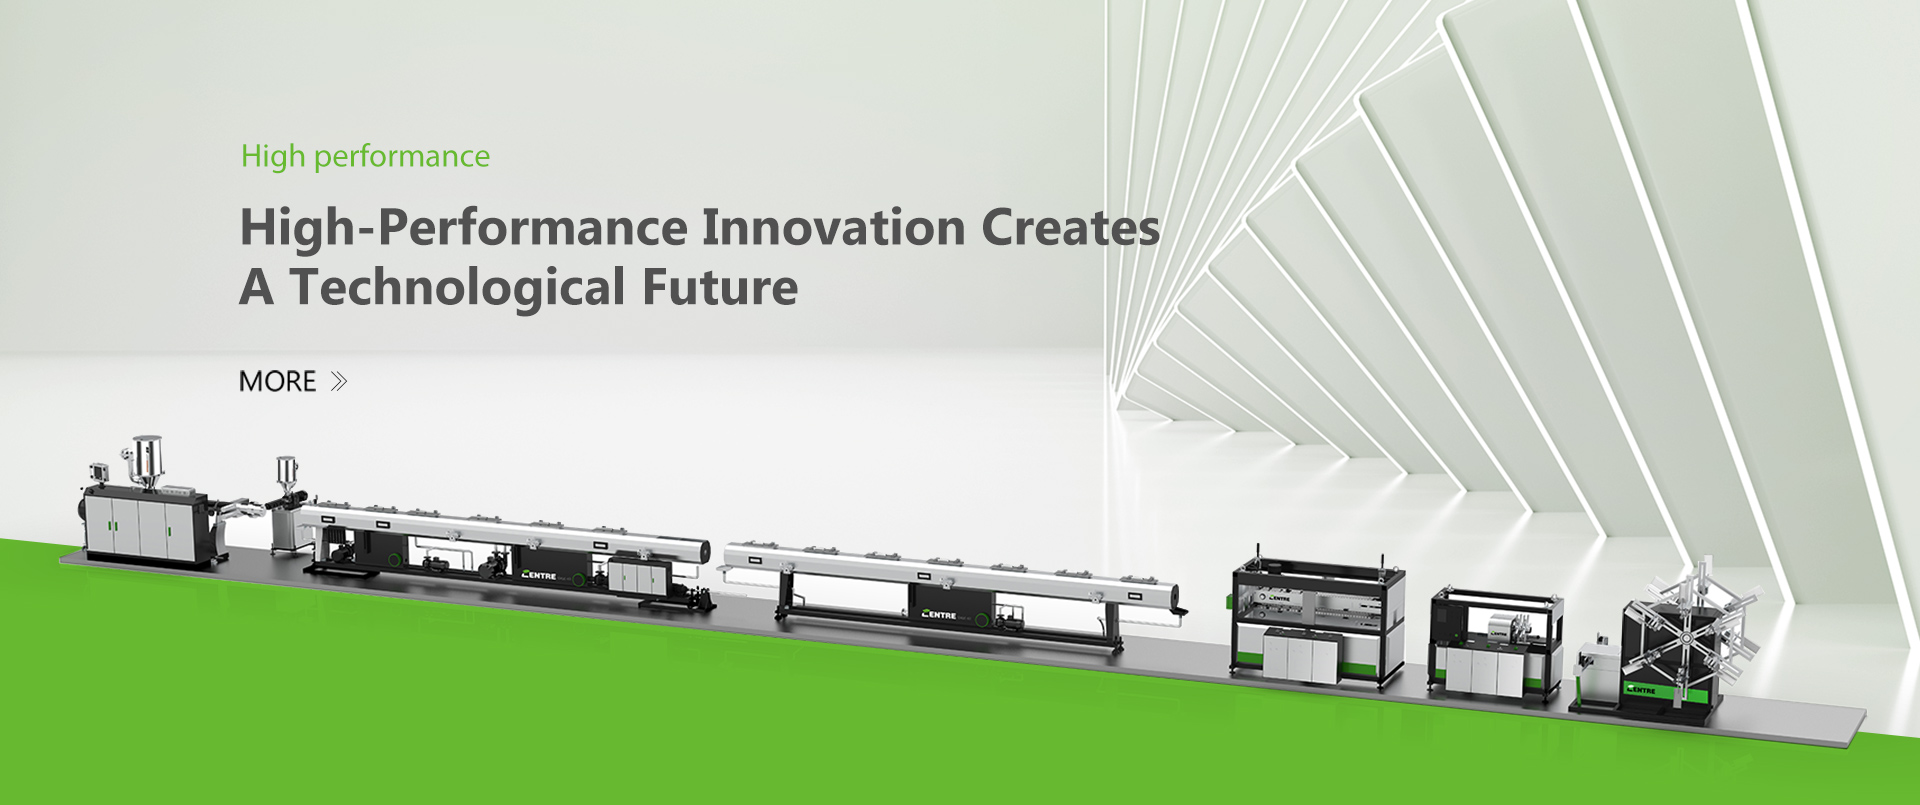 High-Performance Innovation Creates A Technological Future